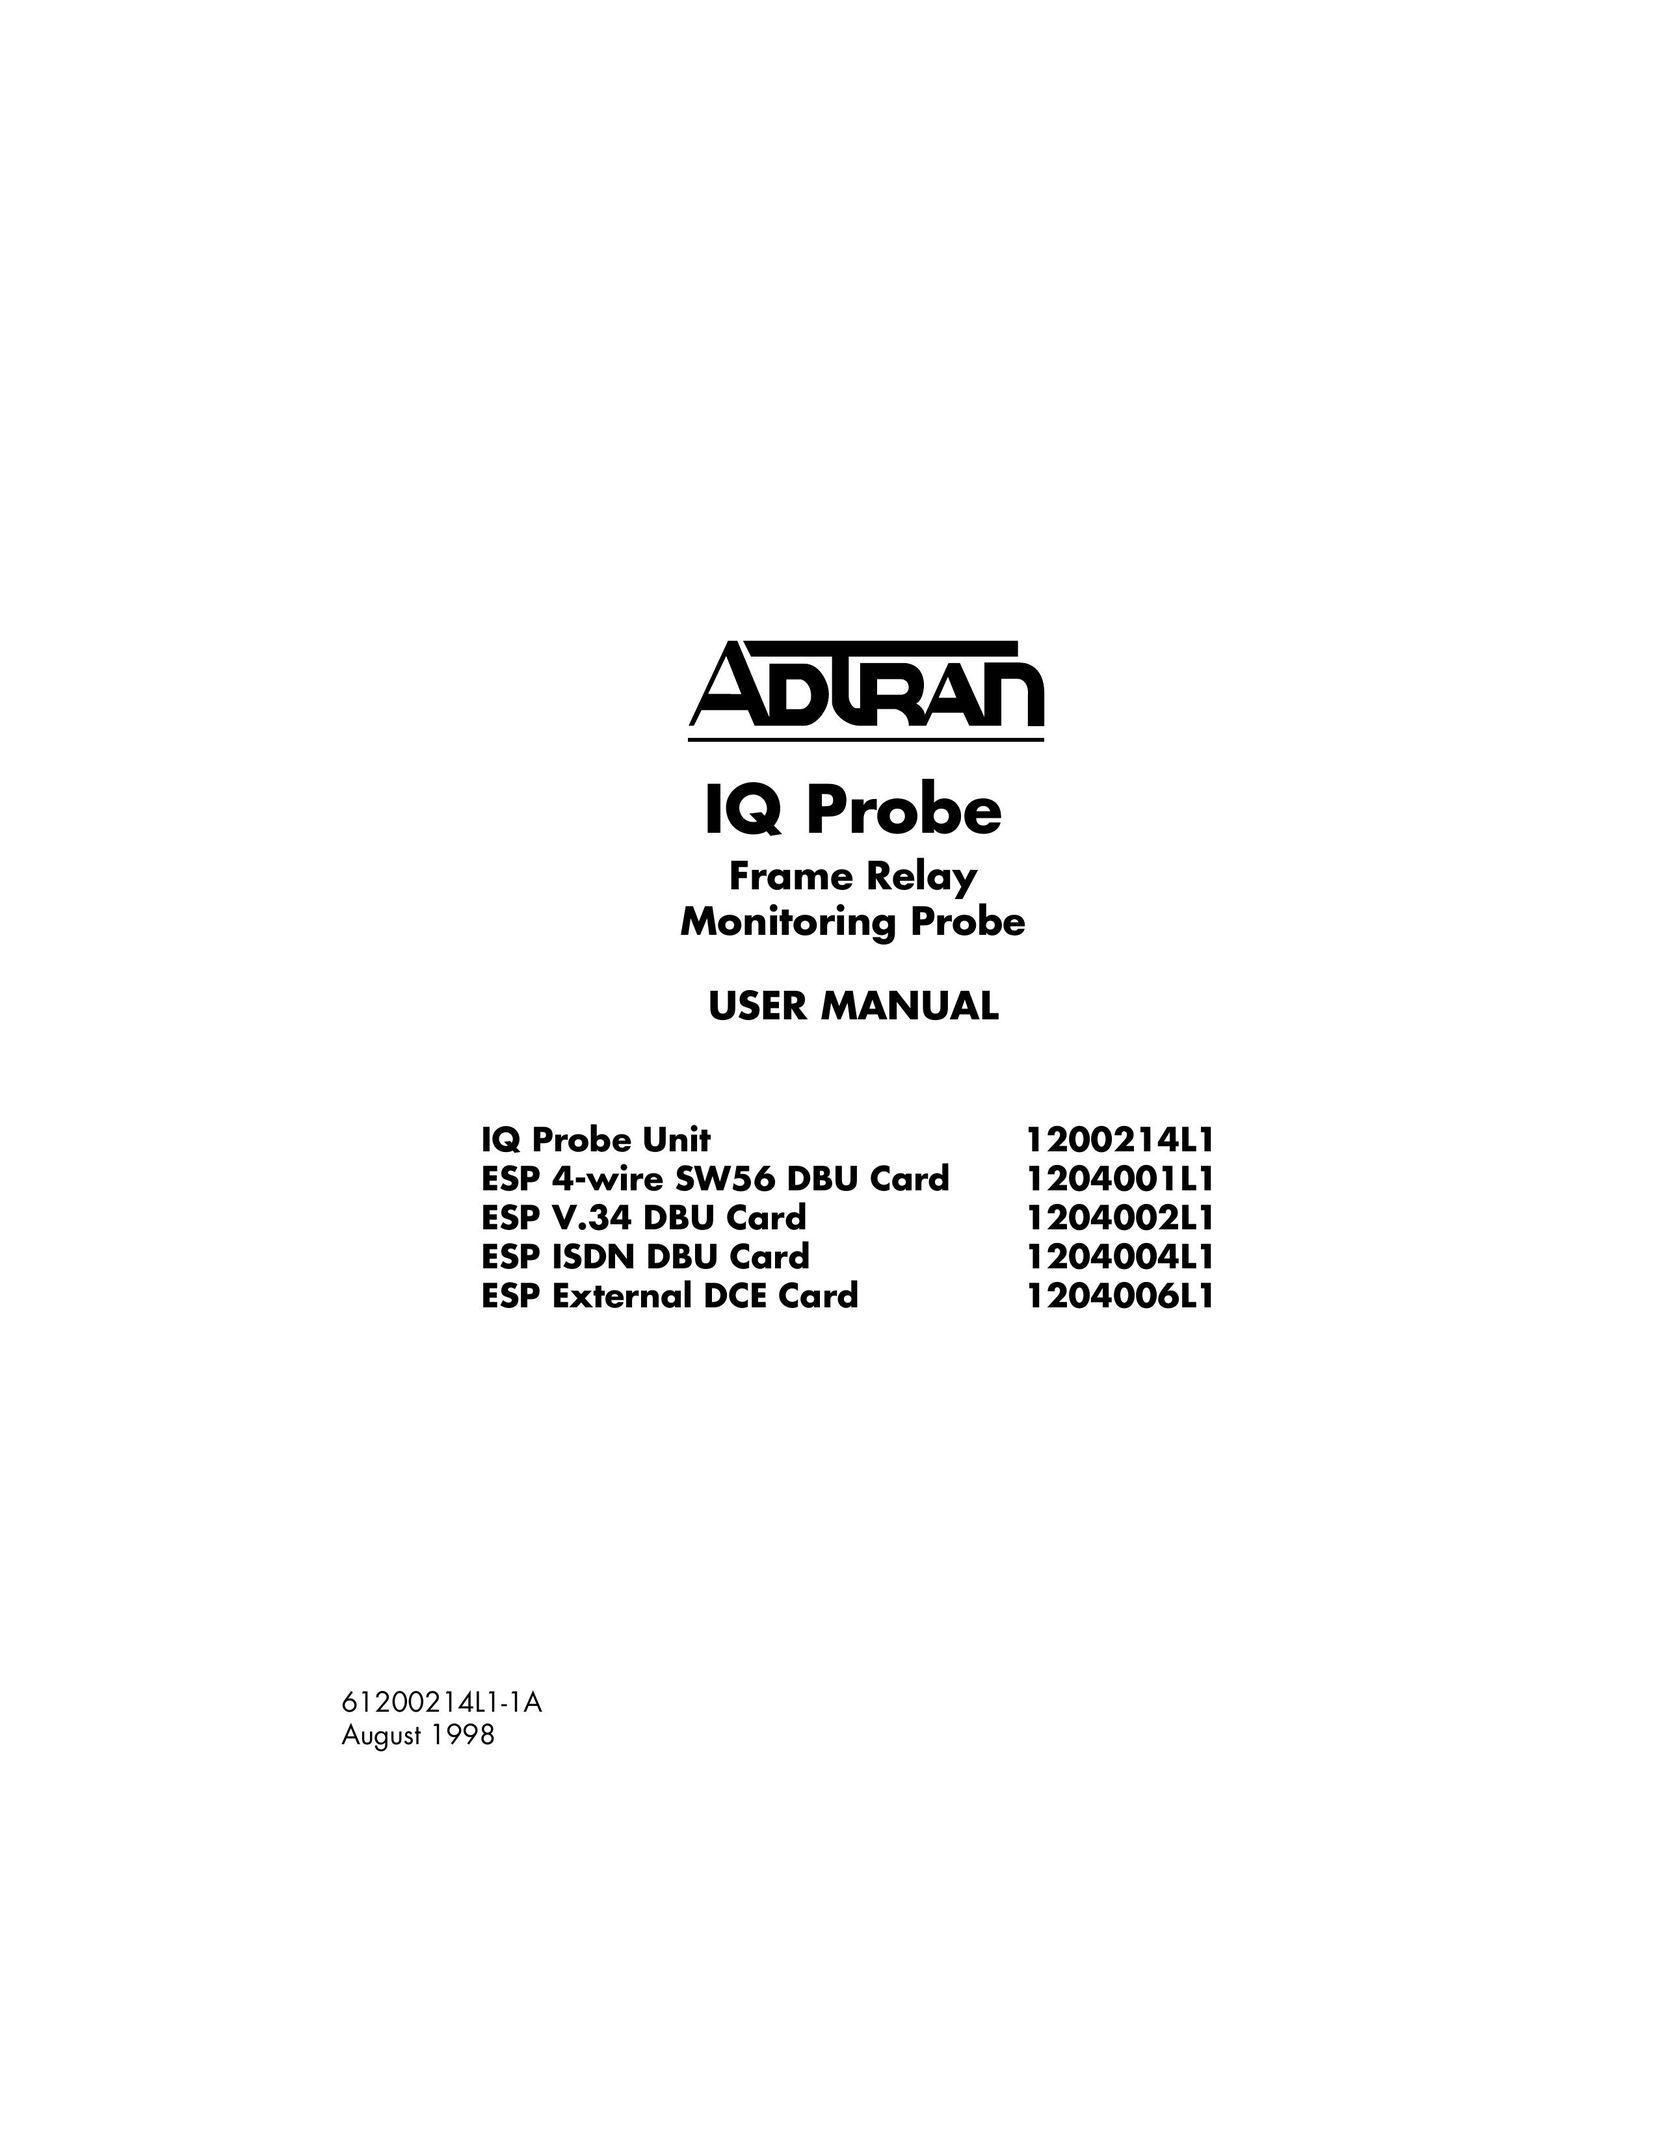 ADTRAN 1204006L1 Network Card User Manual